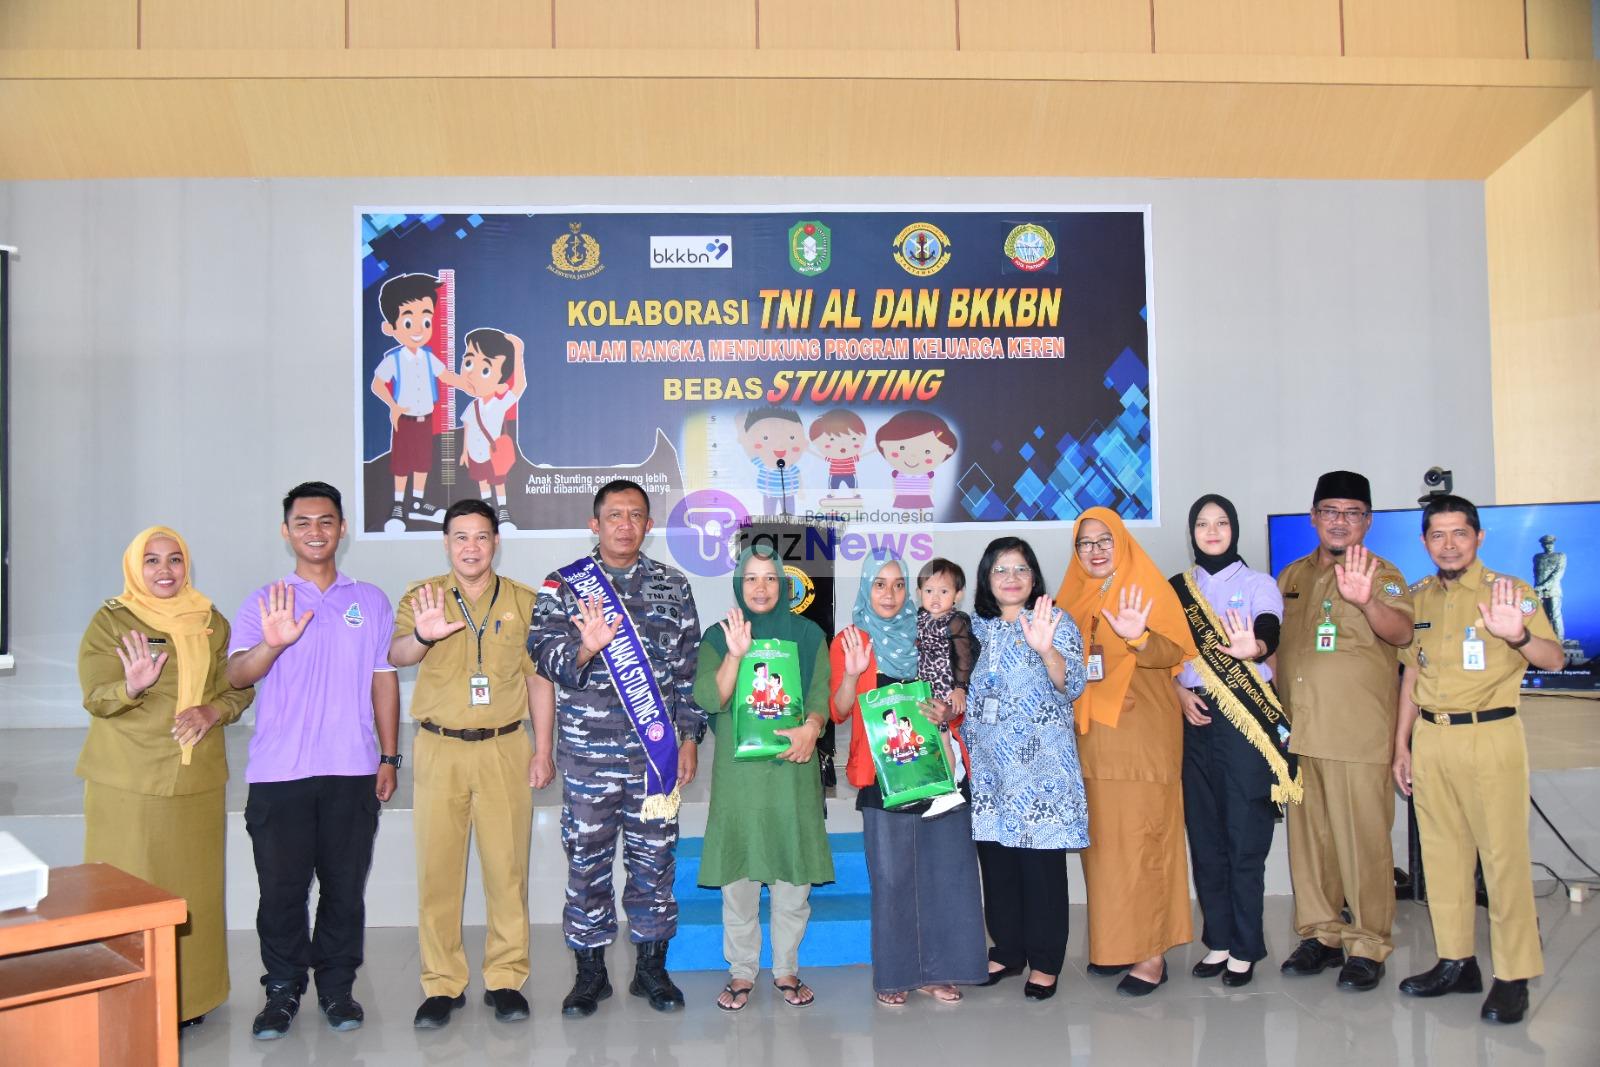 Kolaborasi TNI AL dan BKKBN Dalam Rangka Mendukung Program Keluarga Keren Bebas Stunting